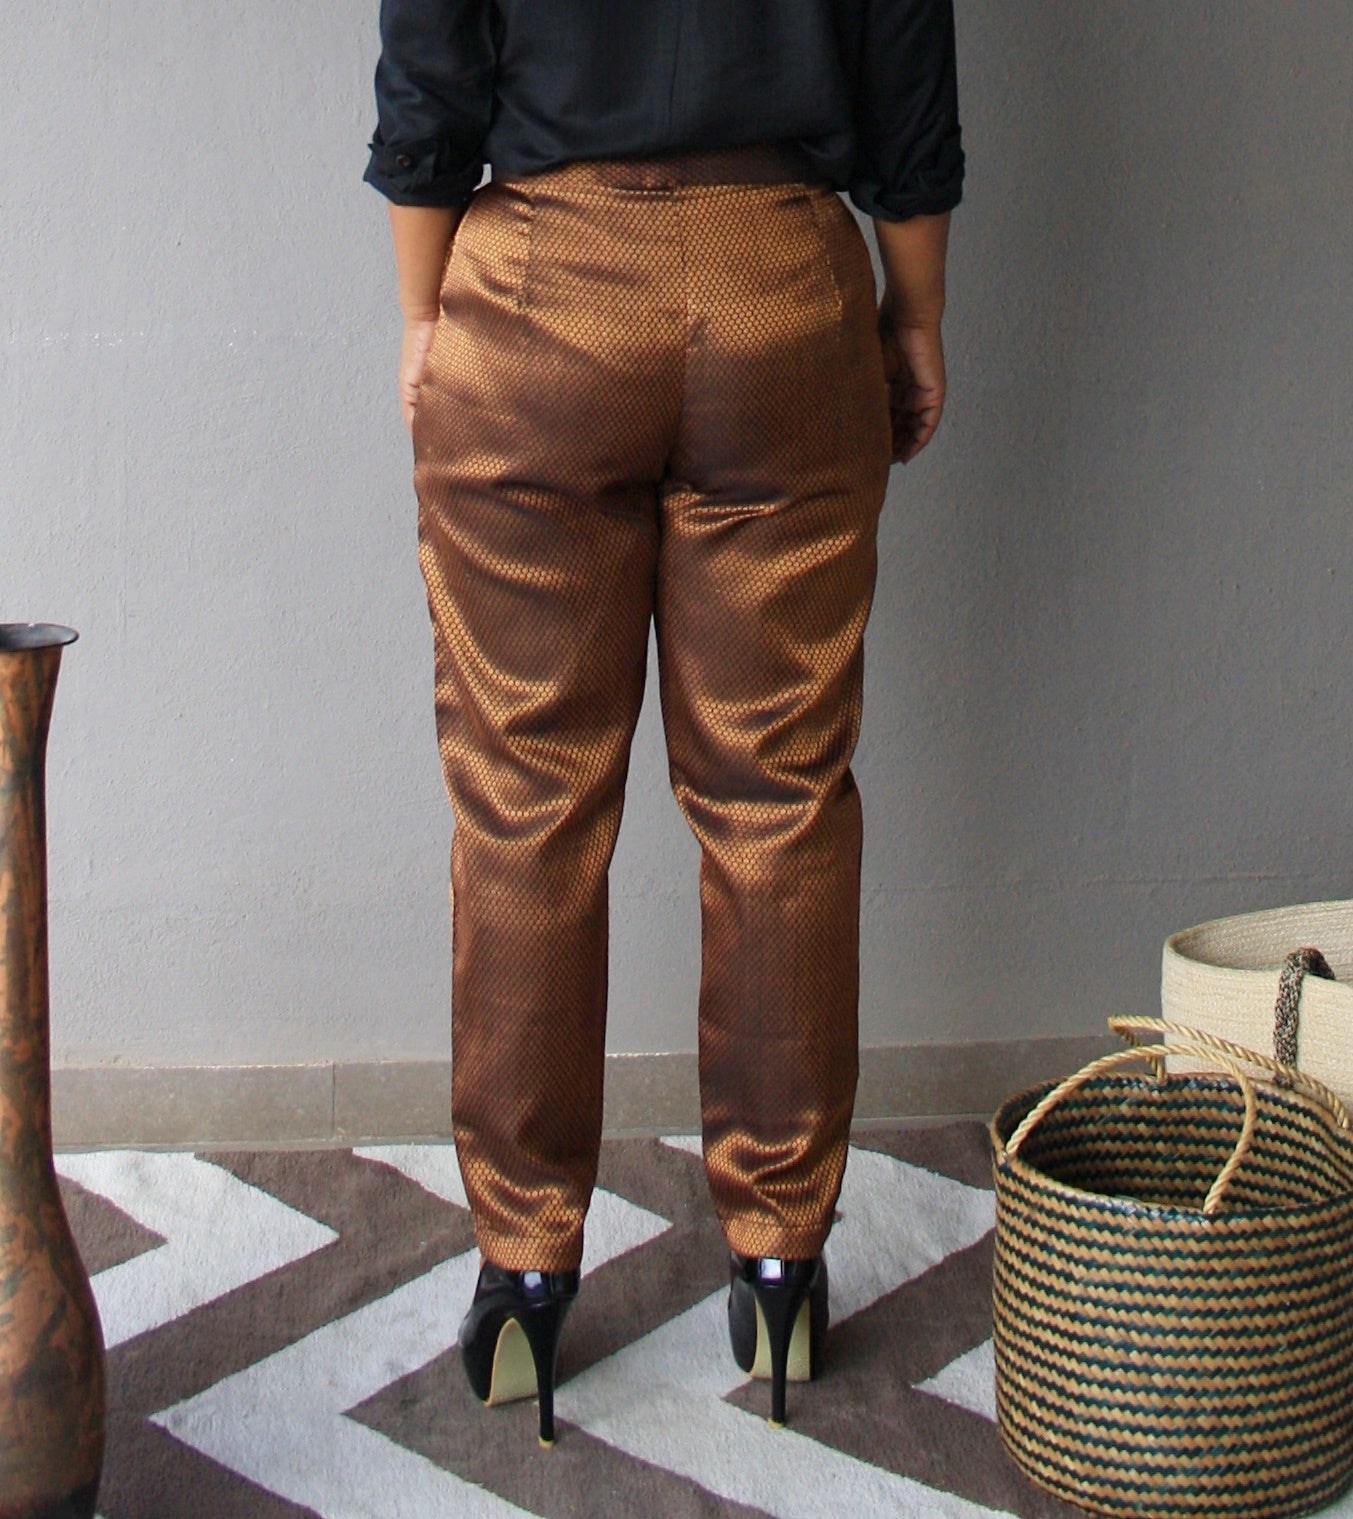 Copper and Black Brocade Pants